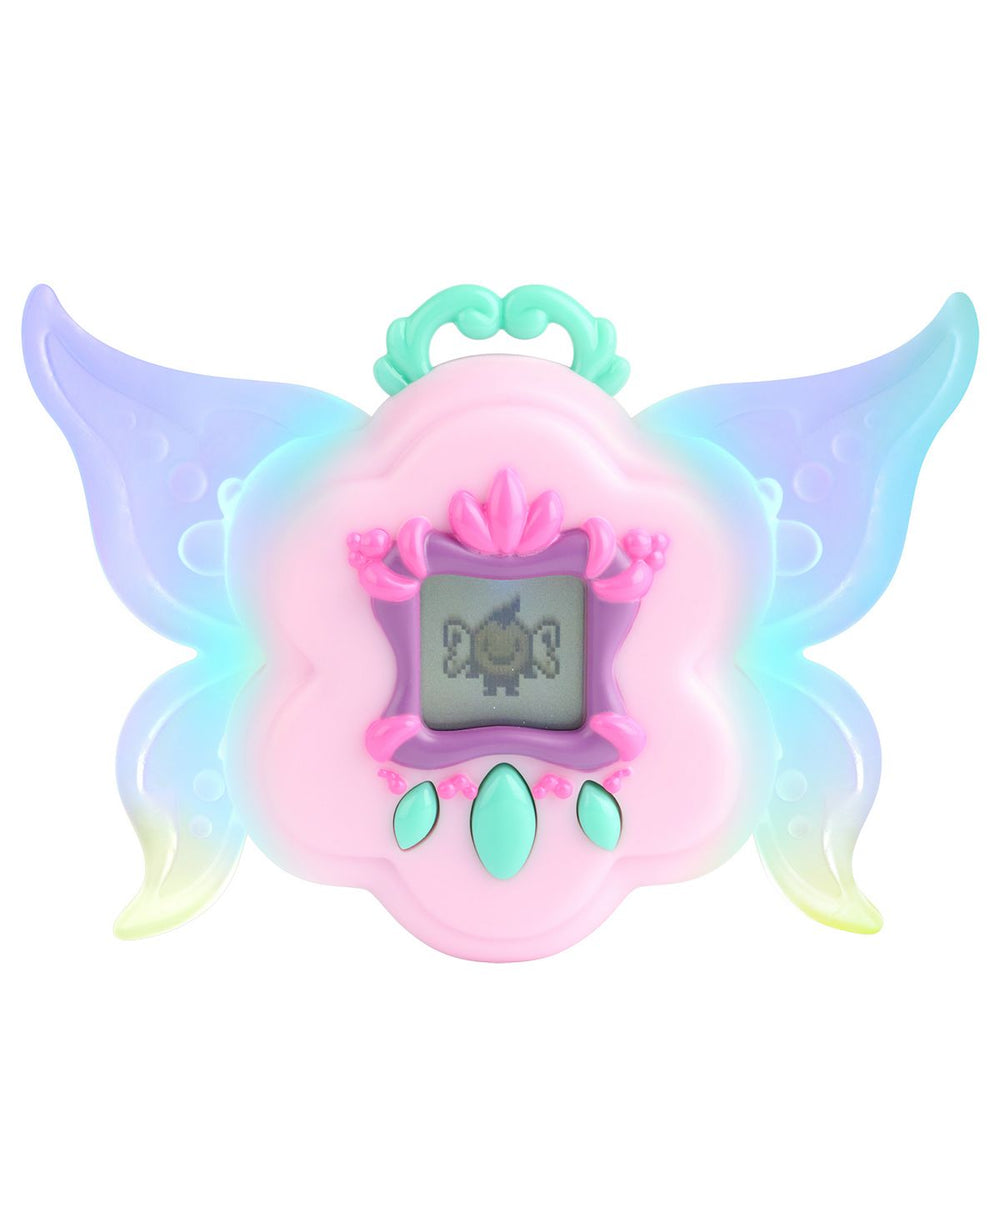 Got2Glow Fairies Baby Fairy Finder - Interactive Virtual Pet Game